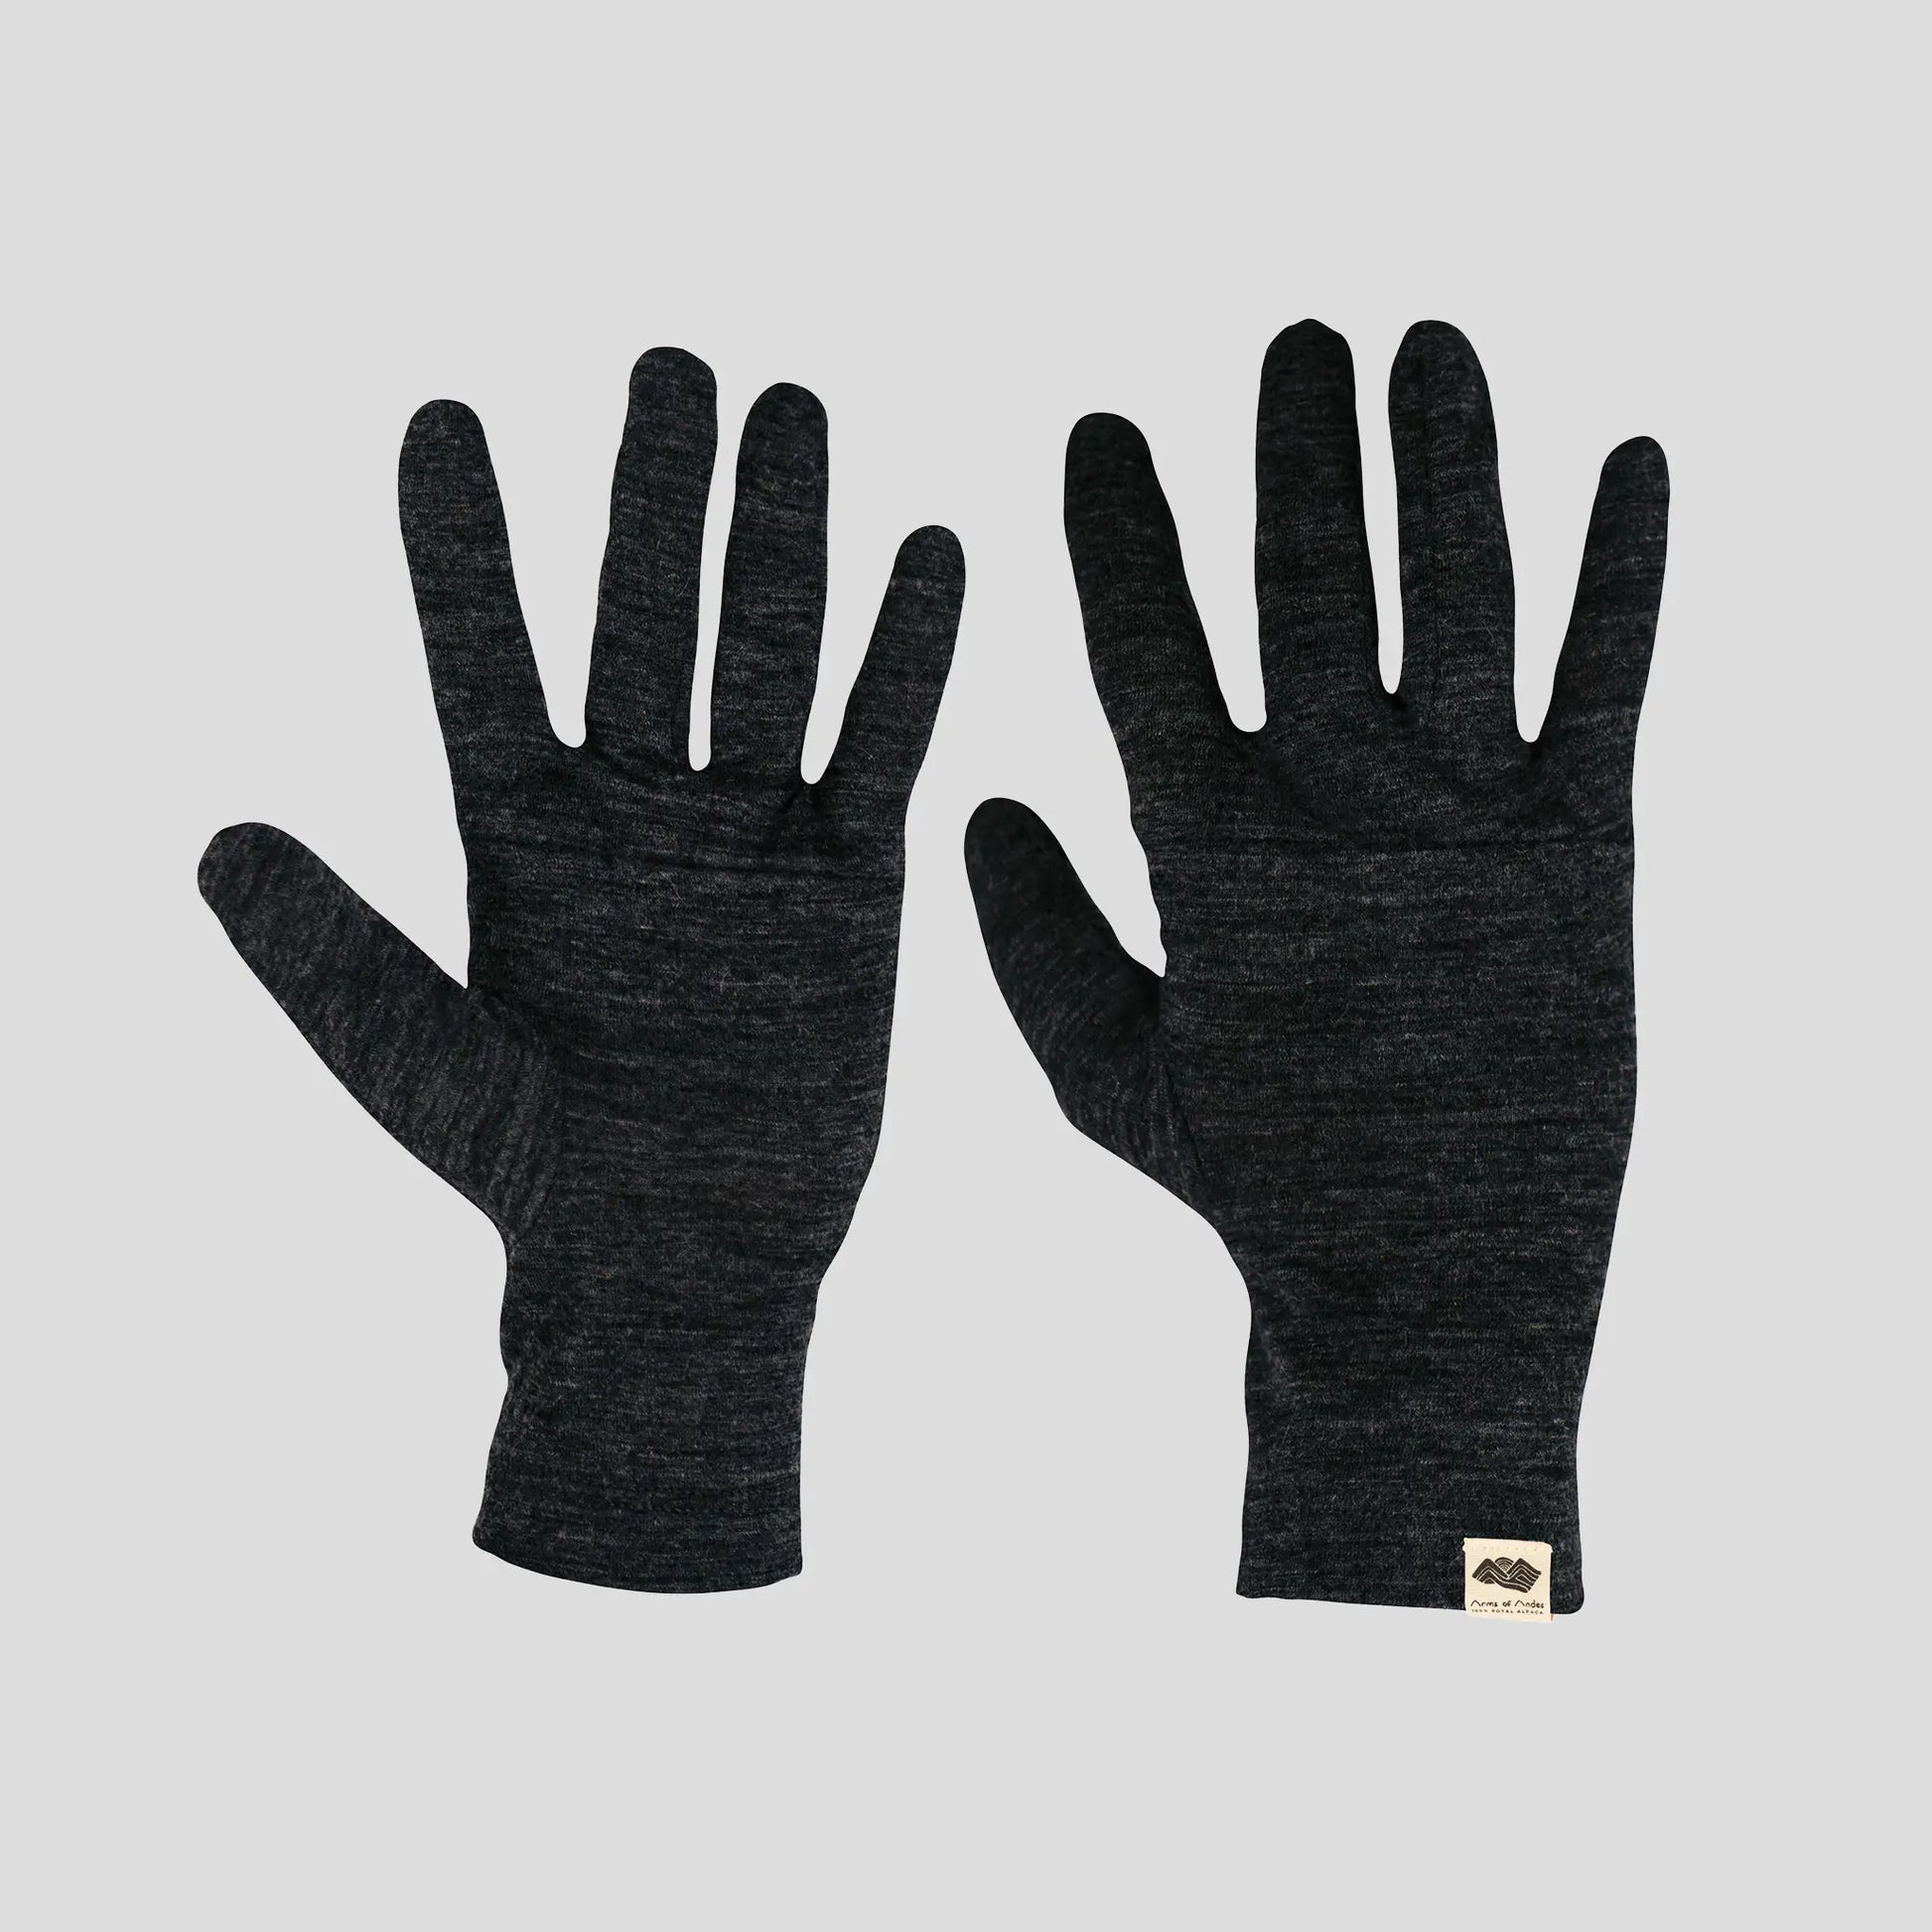 HowToBBQRight Hand Savers Glove Liner